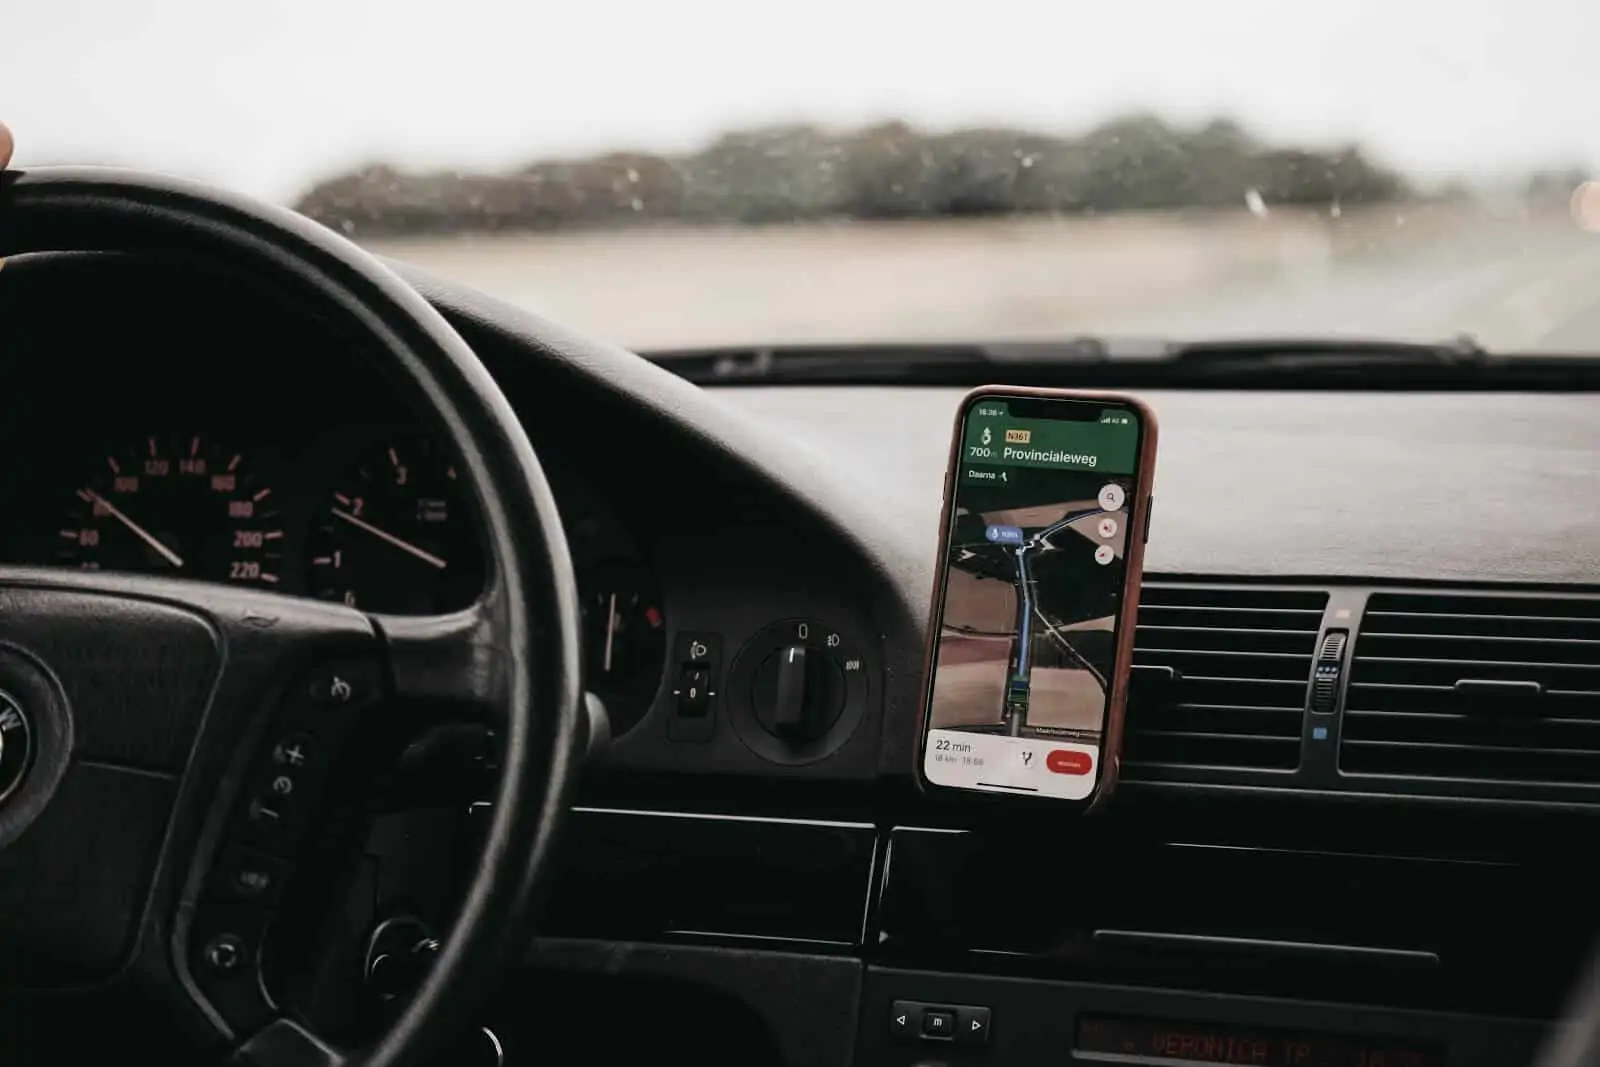 Phone mounted to dashboard navigating driver